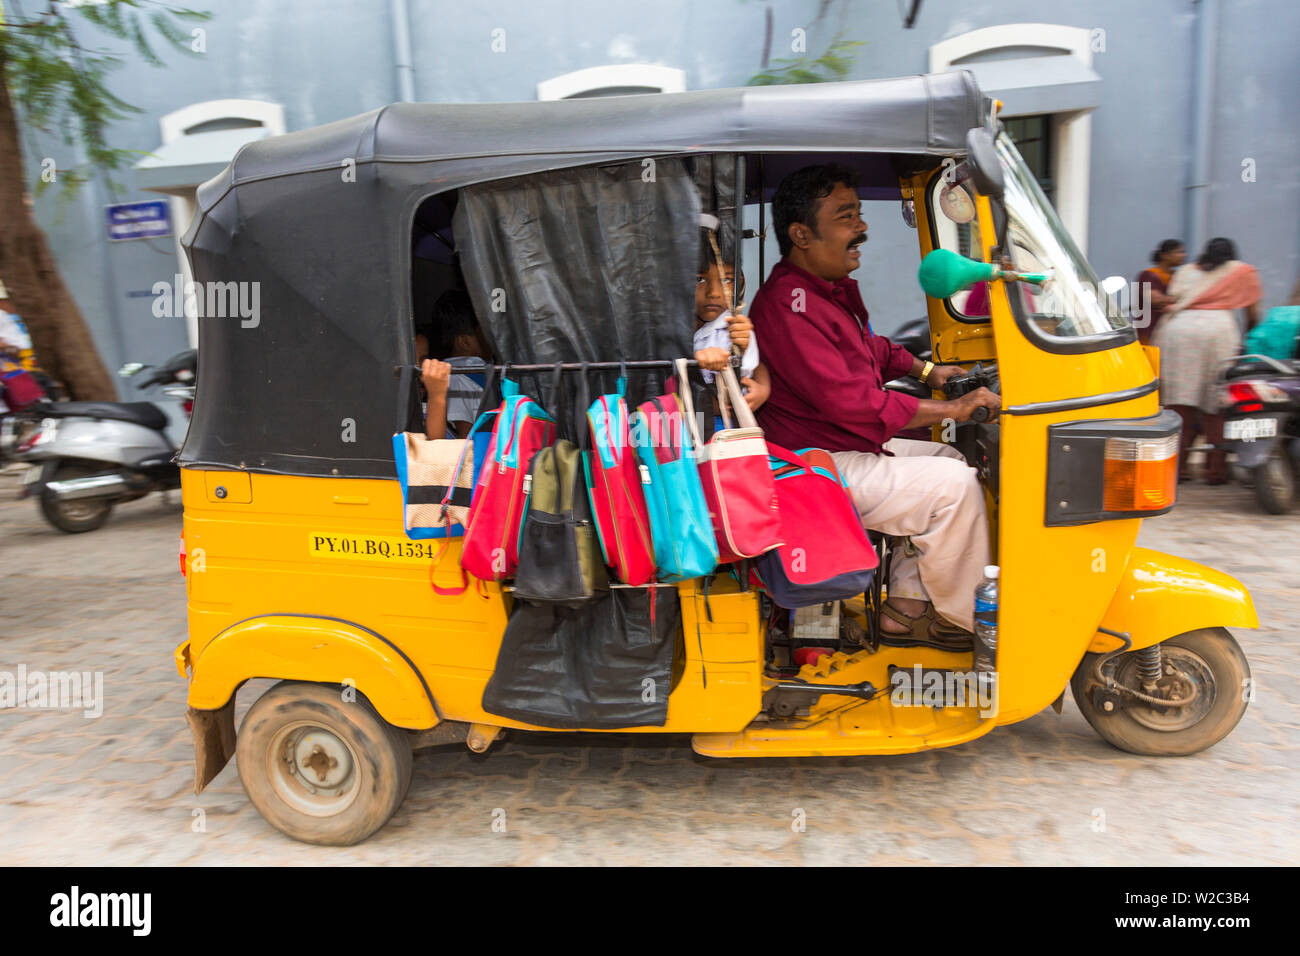 Auto-rickshaw taking children to school, Pondicherry, (Puducherry), Tamil Nadu, India Stock Photo